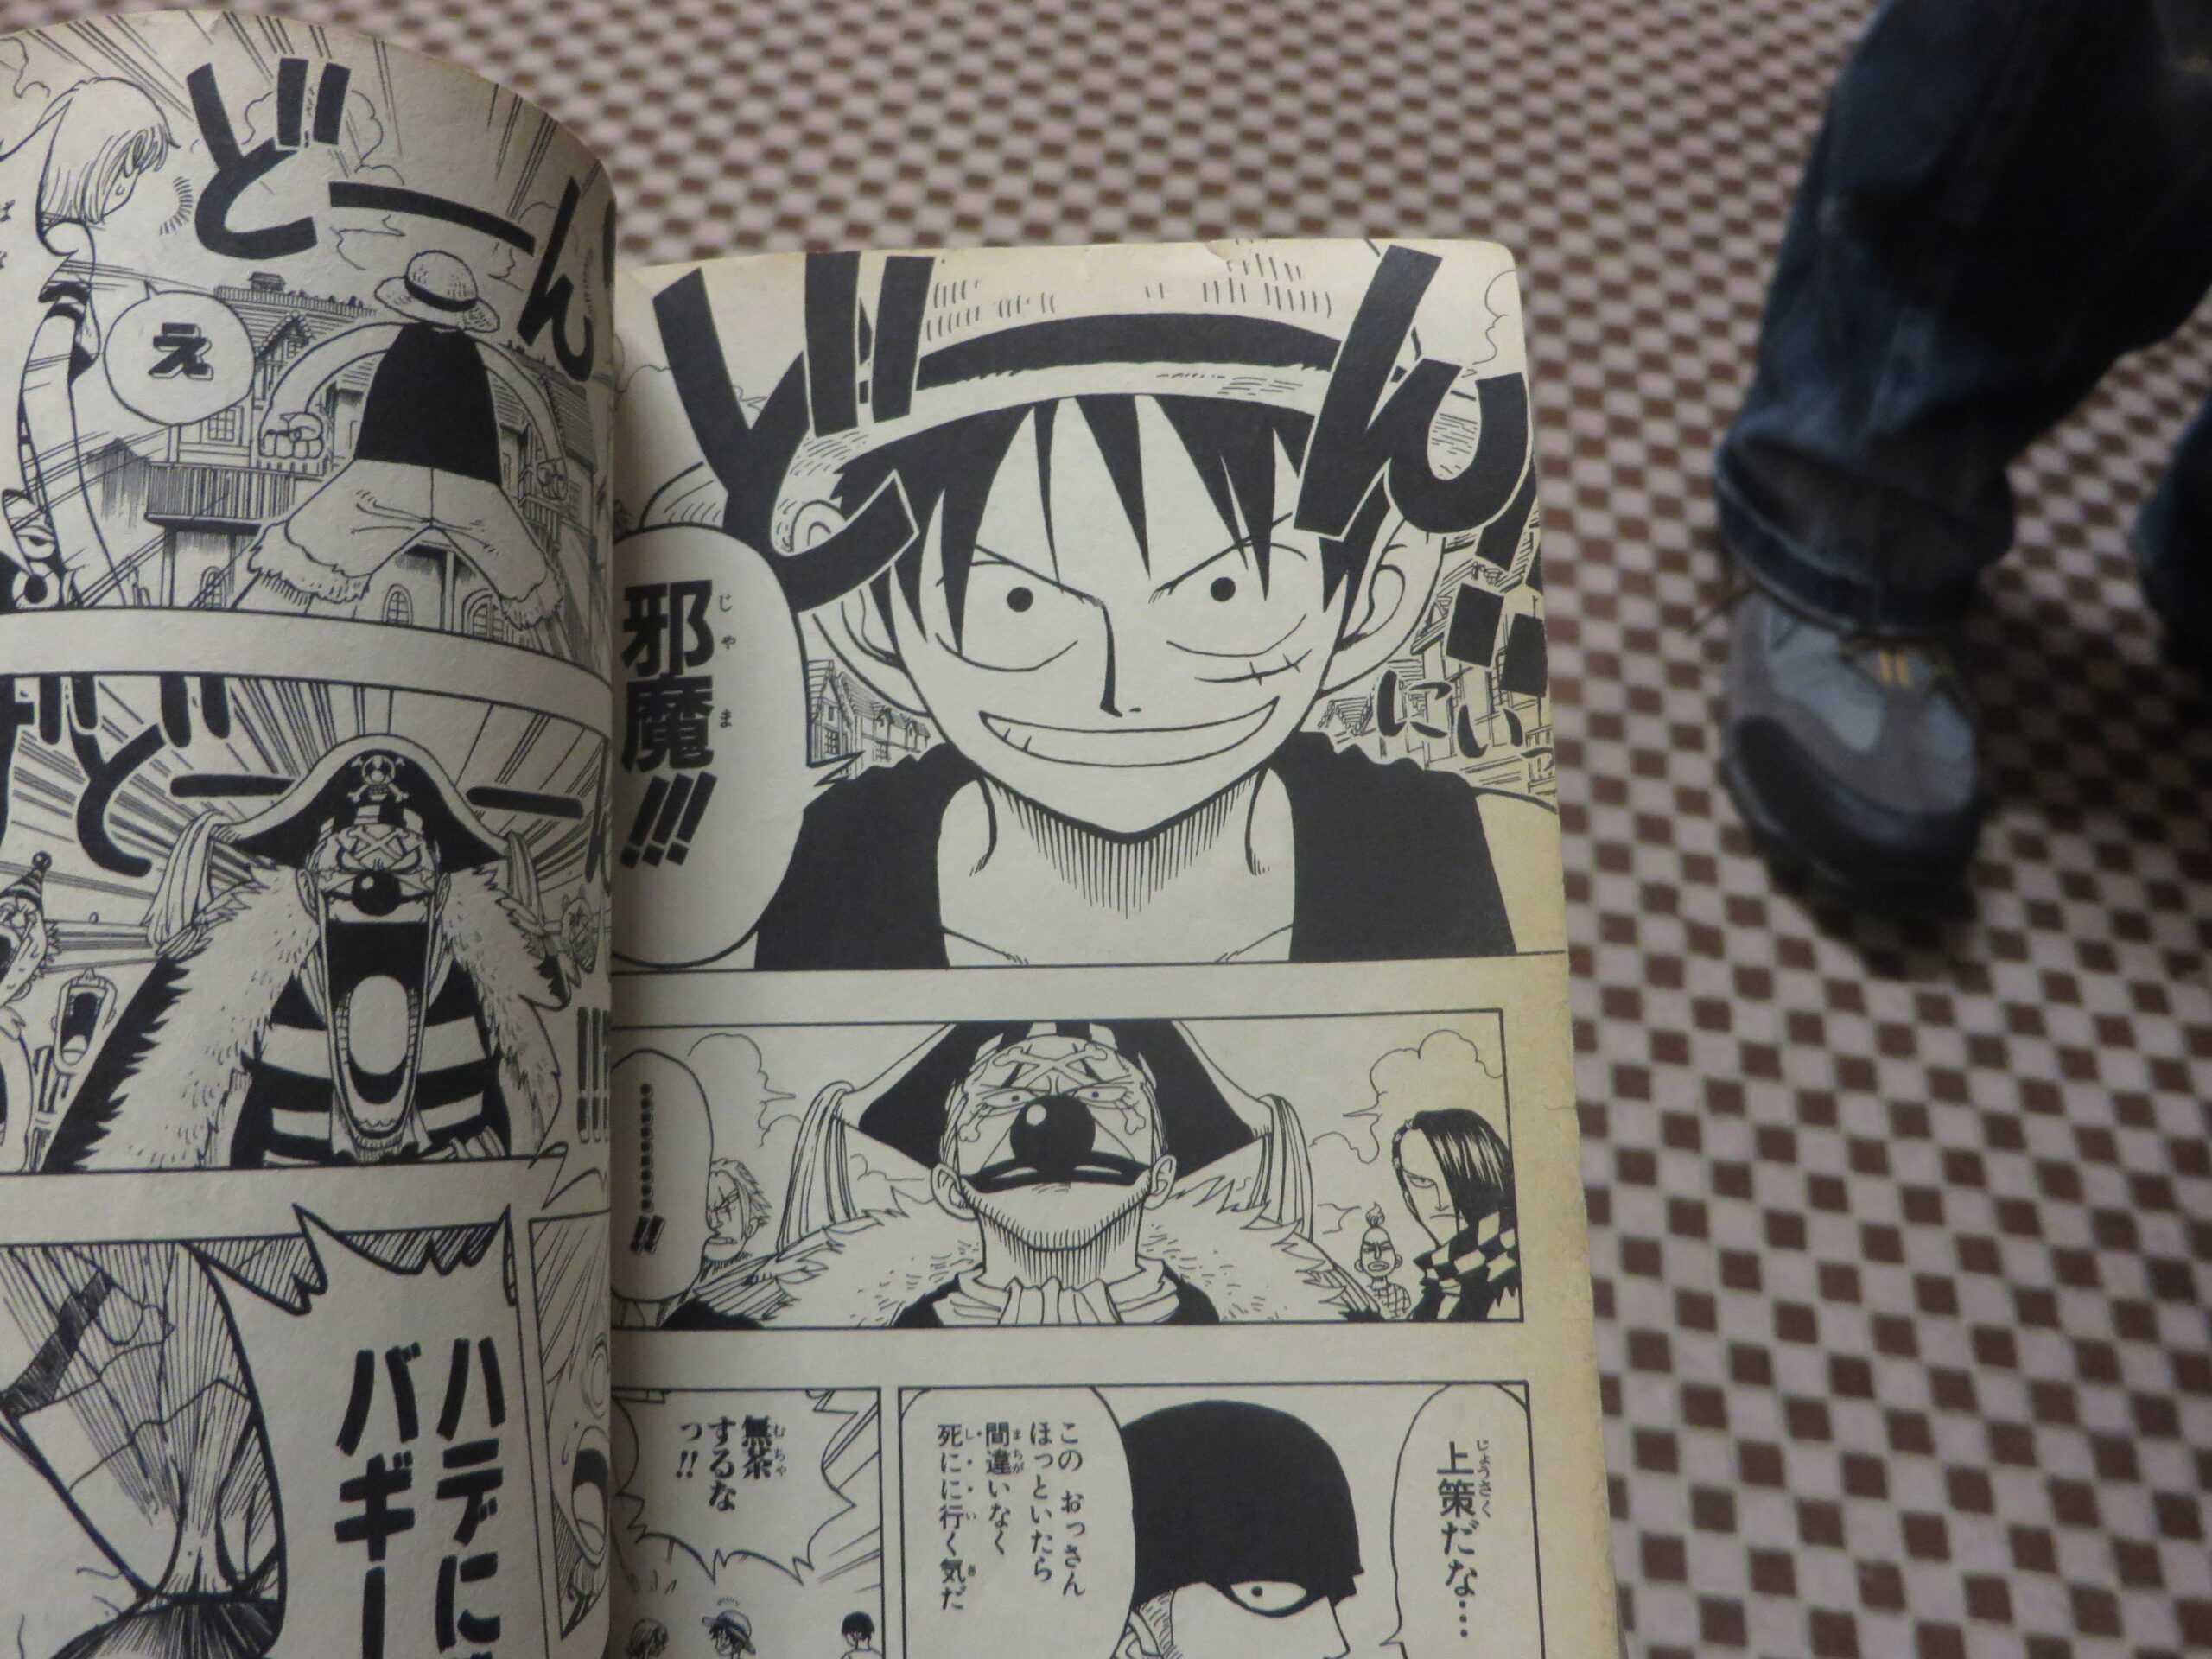 One Piece manga featuring Luffy and Buggy - photo taken at Kyoto International Manga Museum